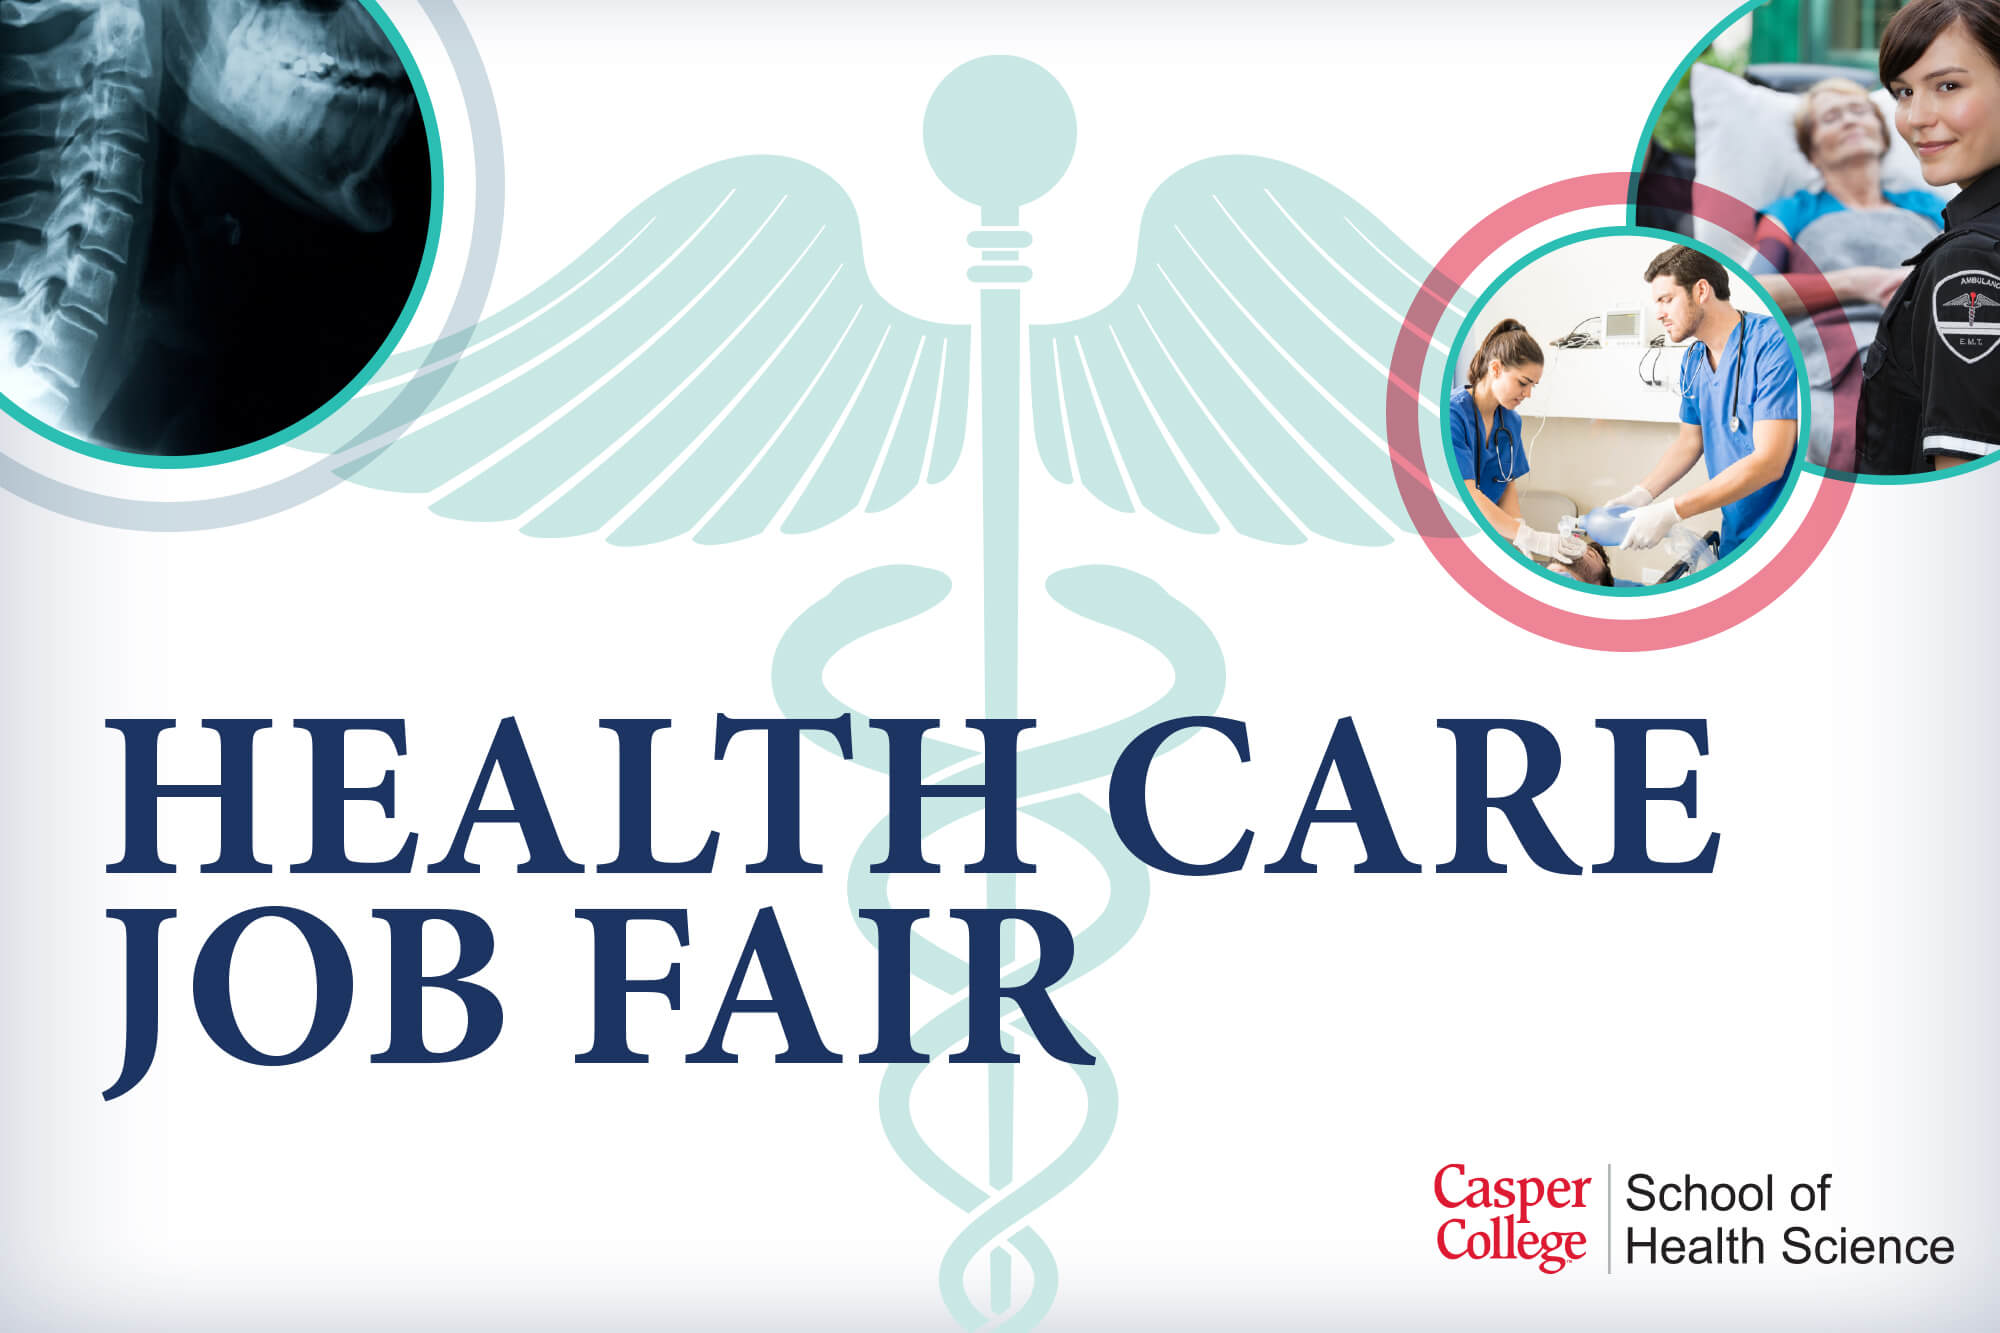 Image for Health Care Job Fair press release.